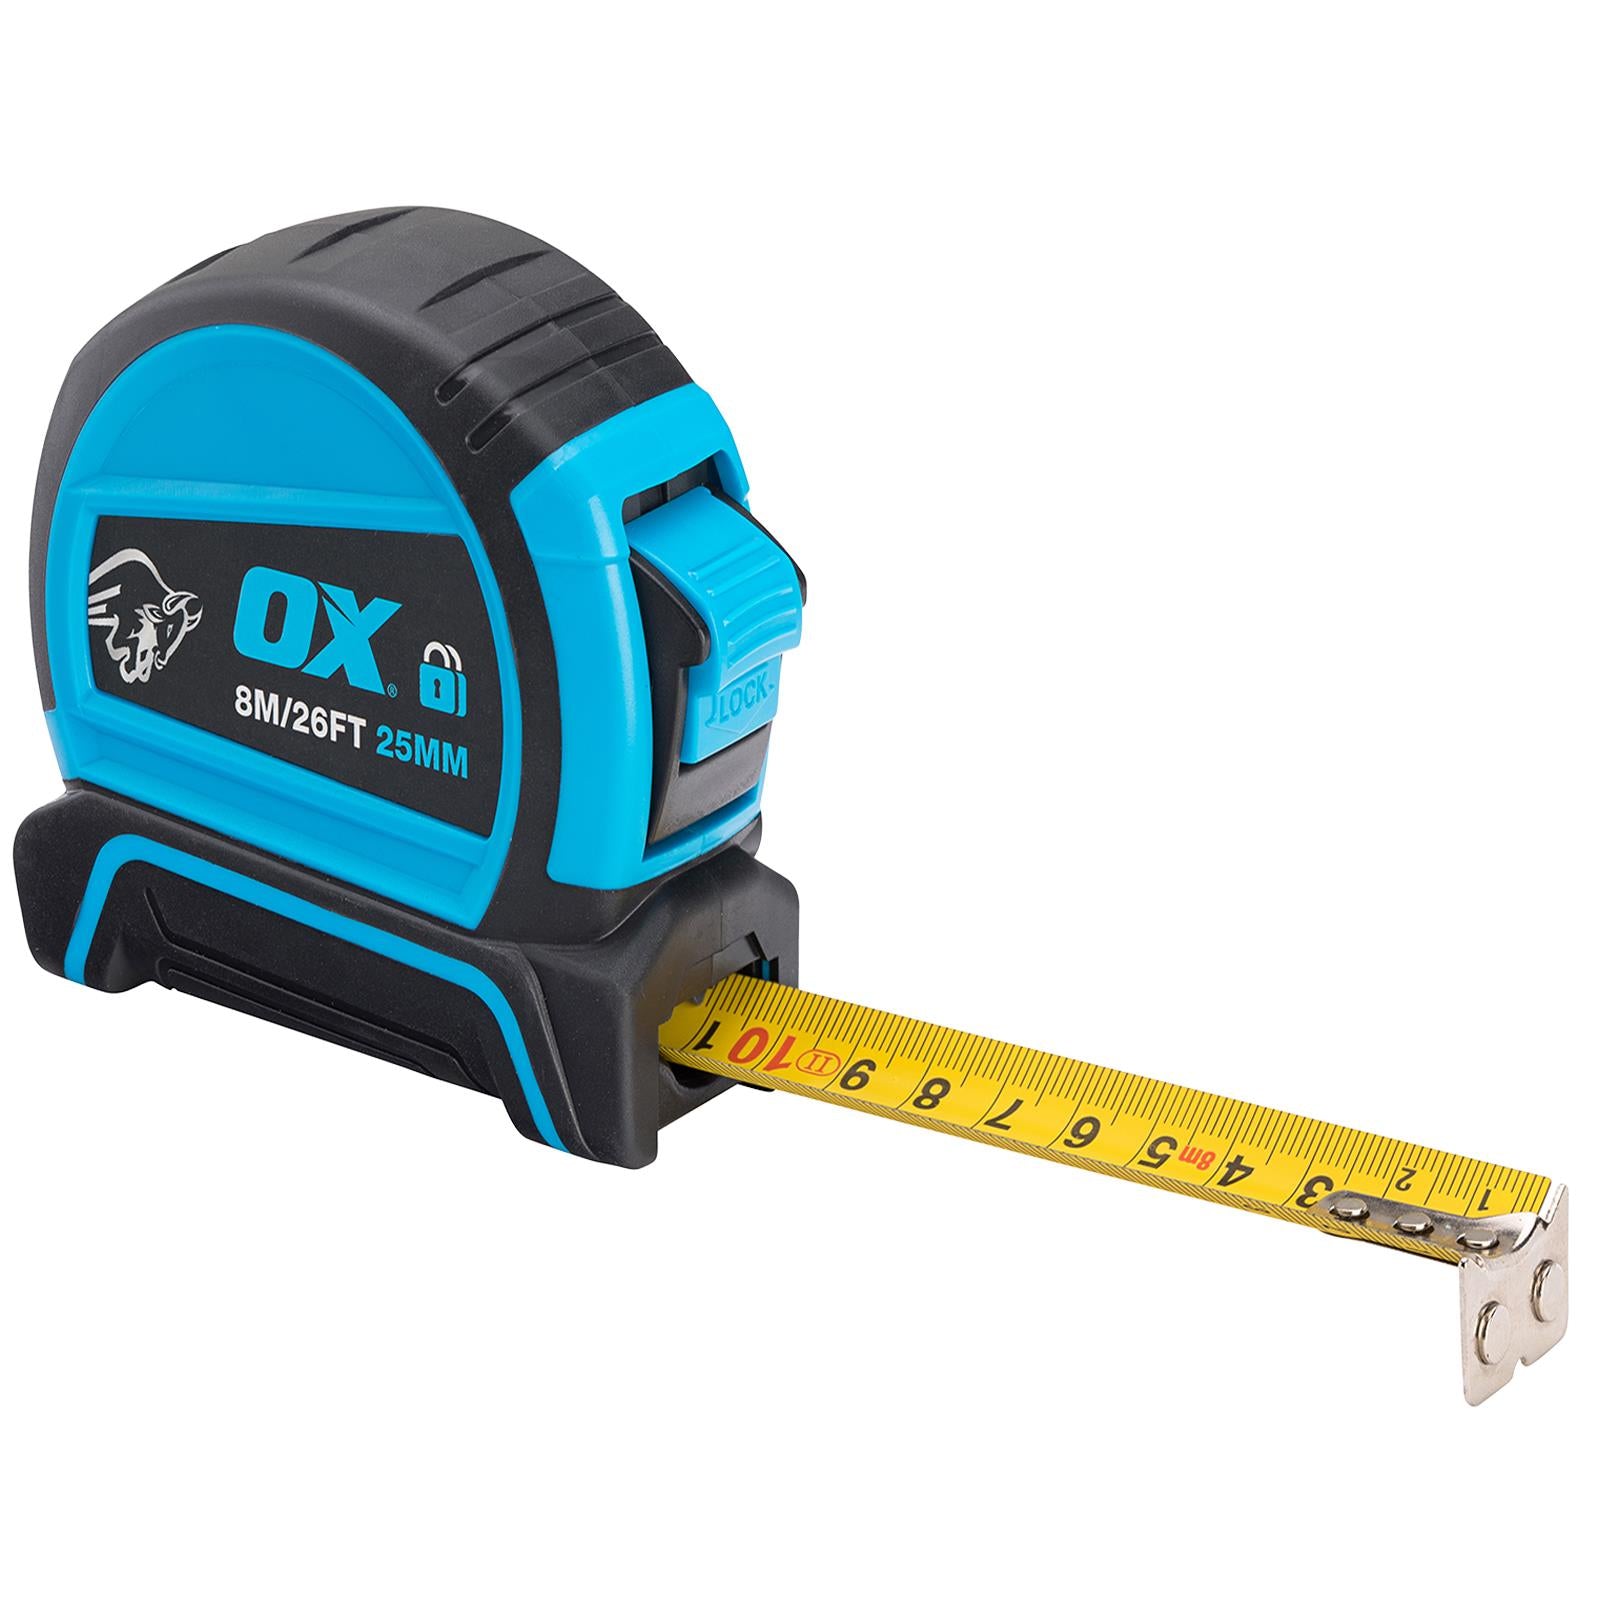 OX Tools Pro Dual Auto Lock Tape Measure 8m